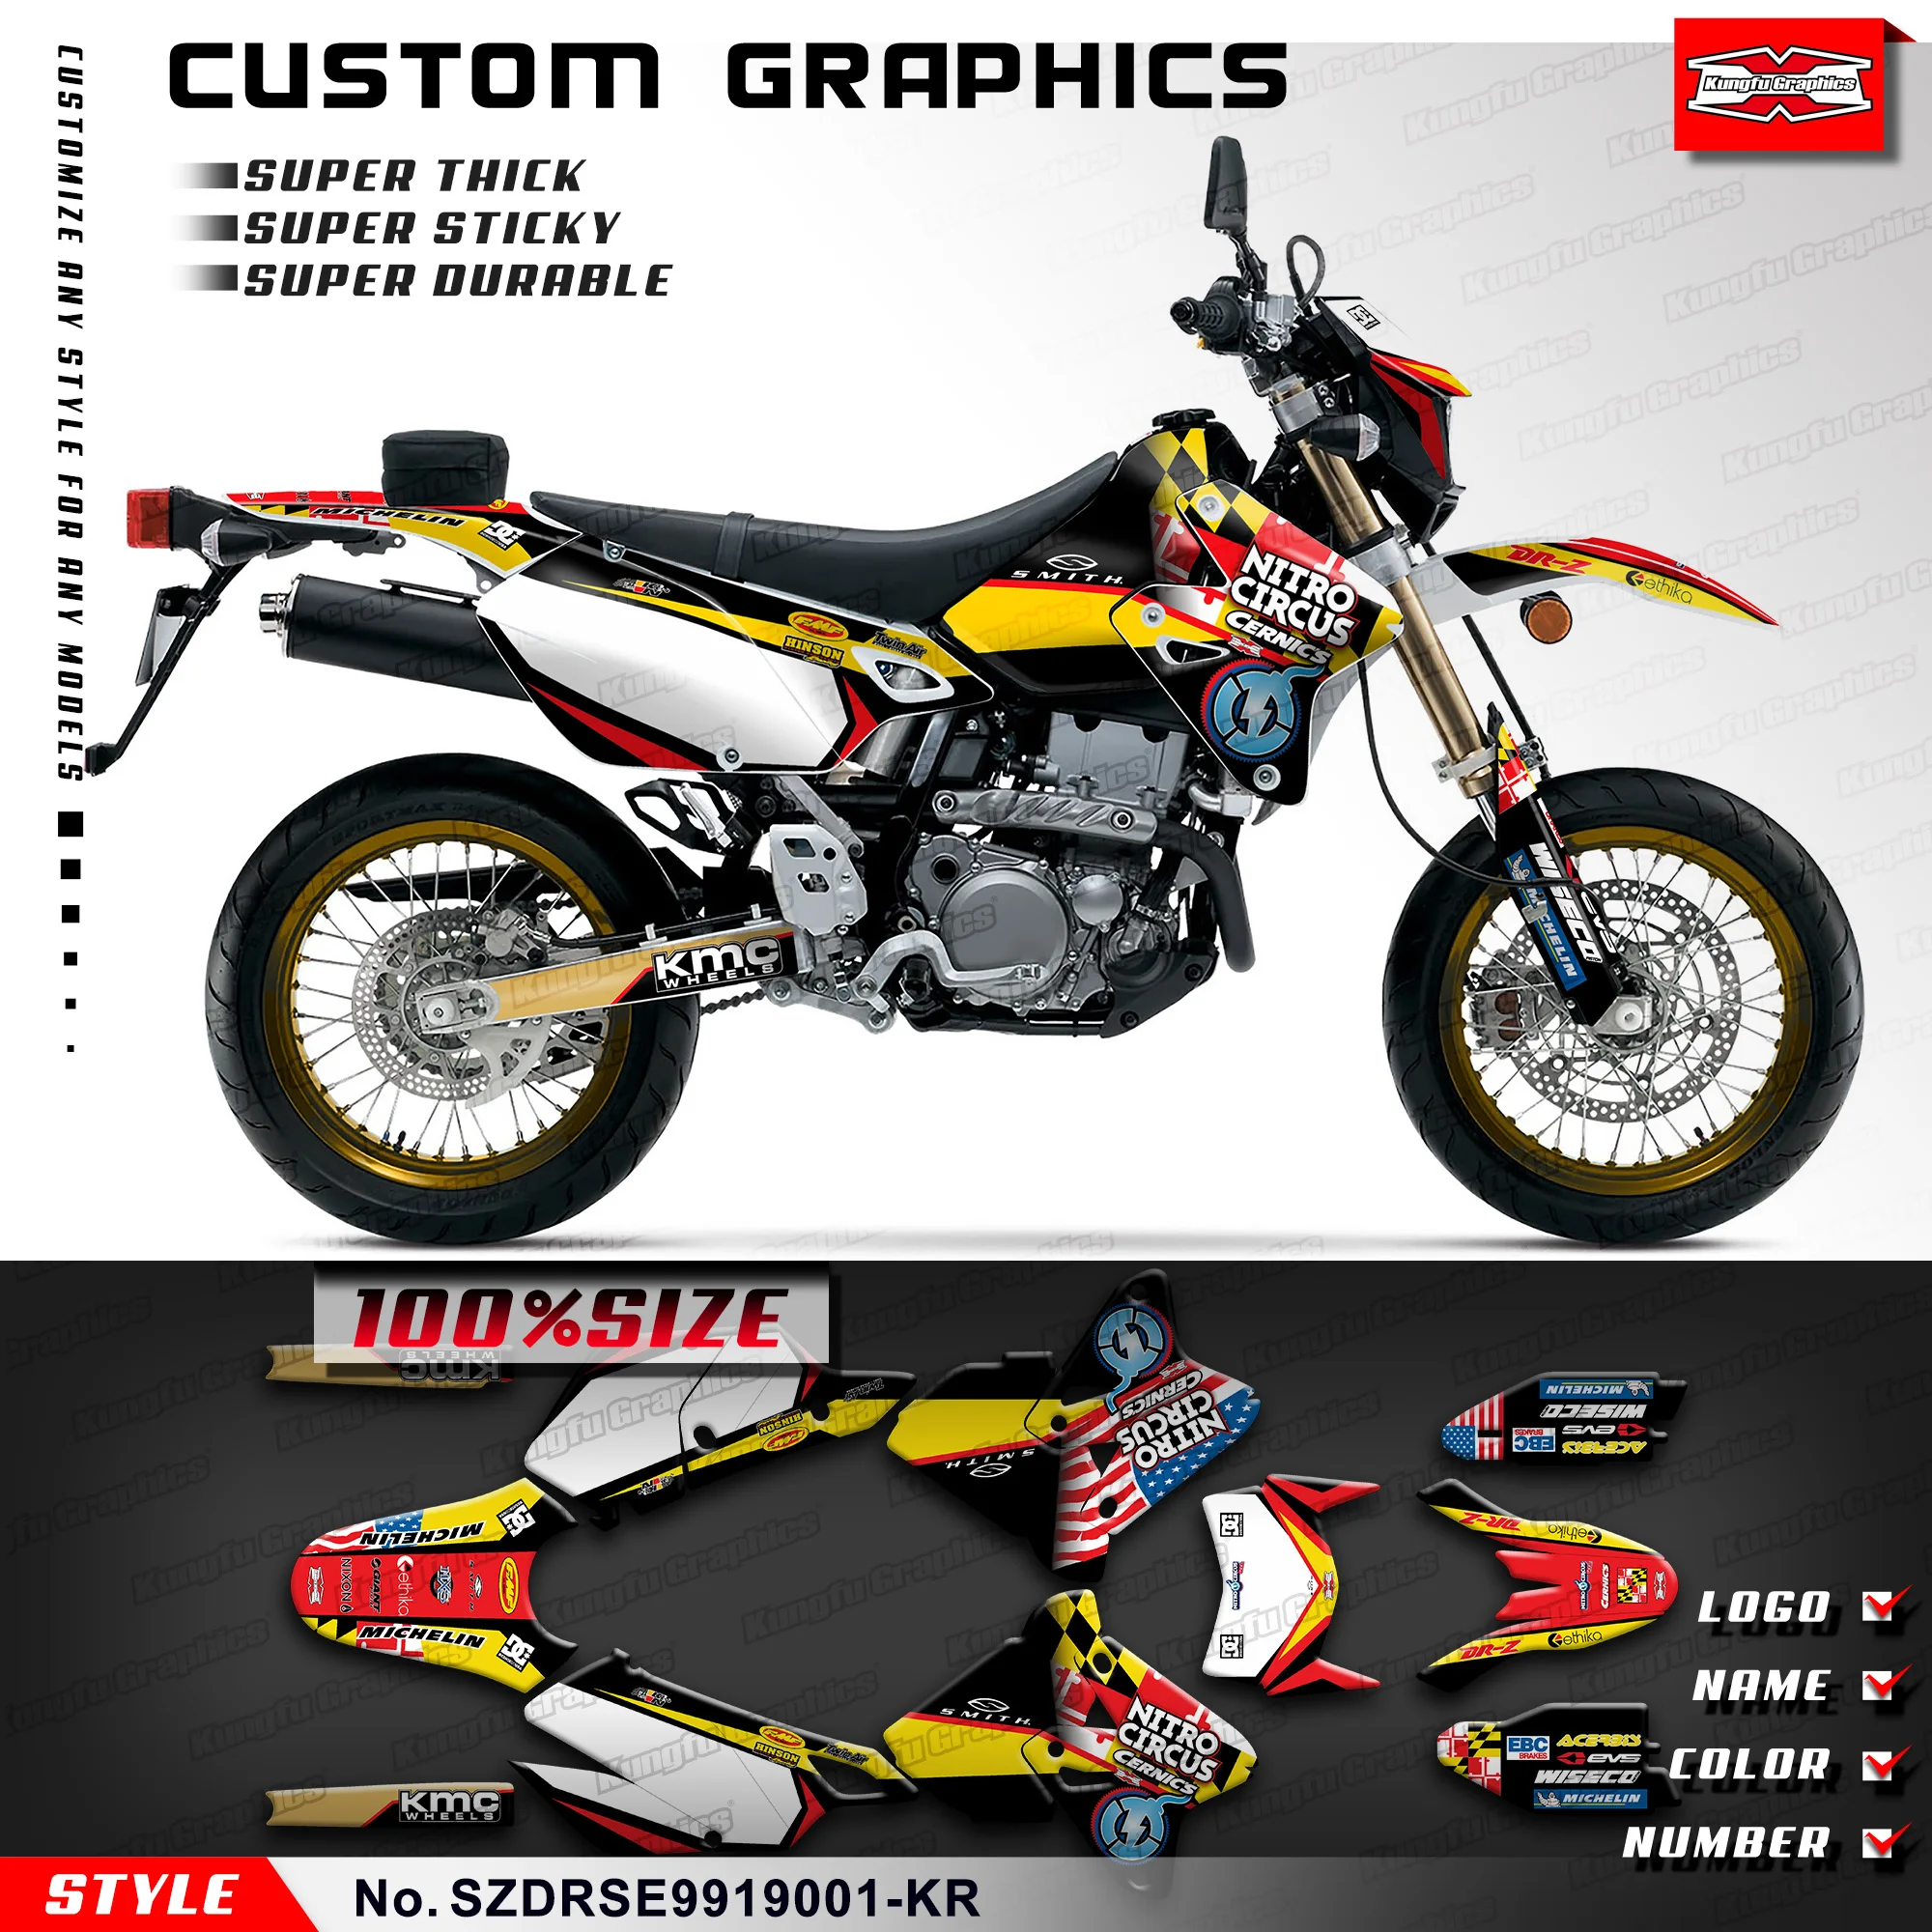 

KUNGFU, графические наклейки, наклейки для мотоциклов Suzuki DRZ400 SM DRZ400SM, SZDRSE9919001-KR